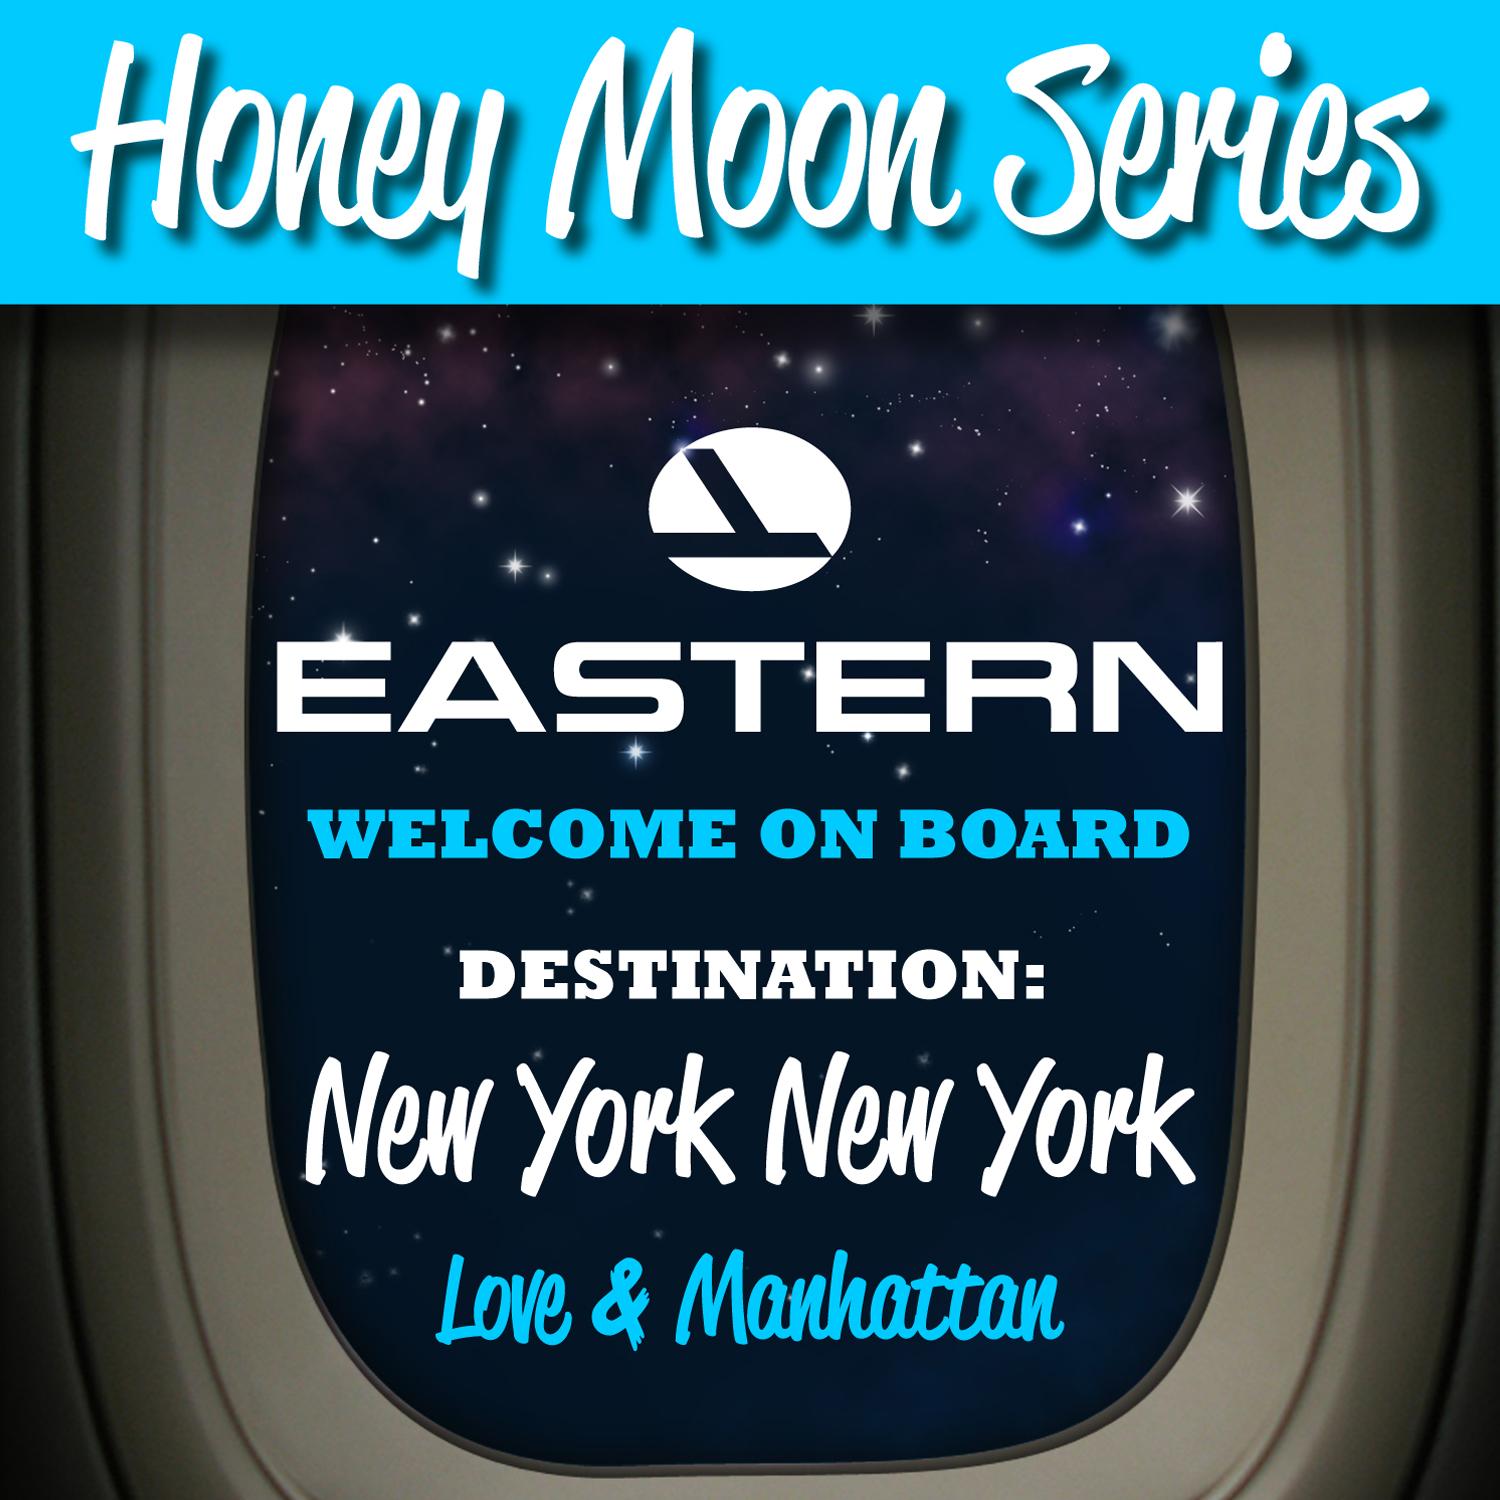 Honey Moon Series: Destination: New York